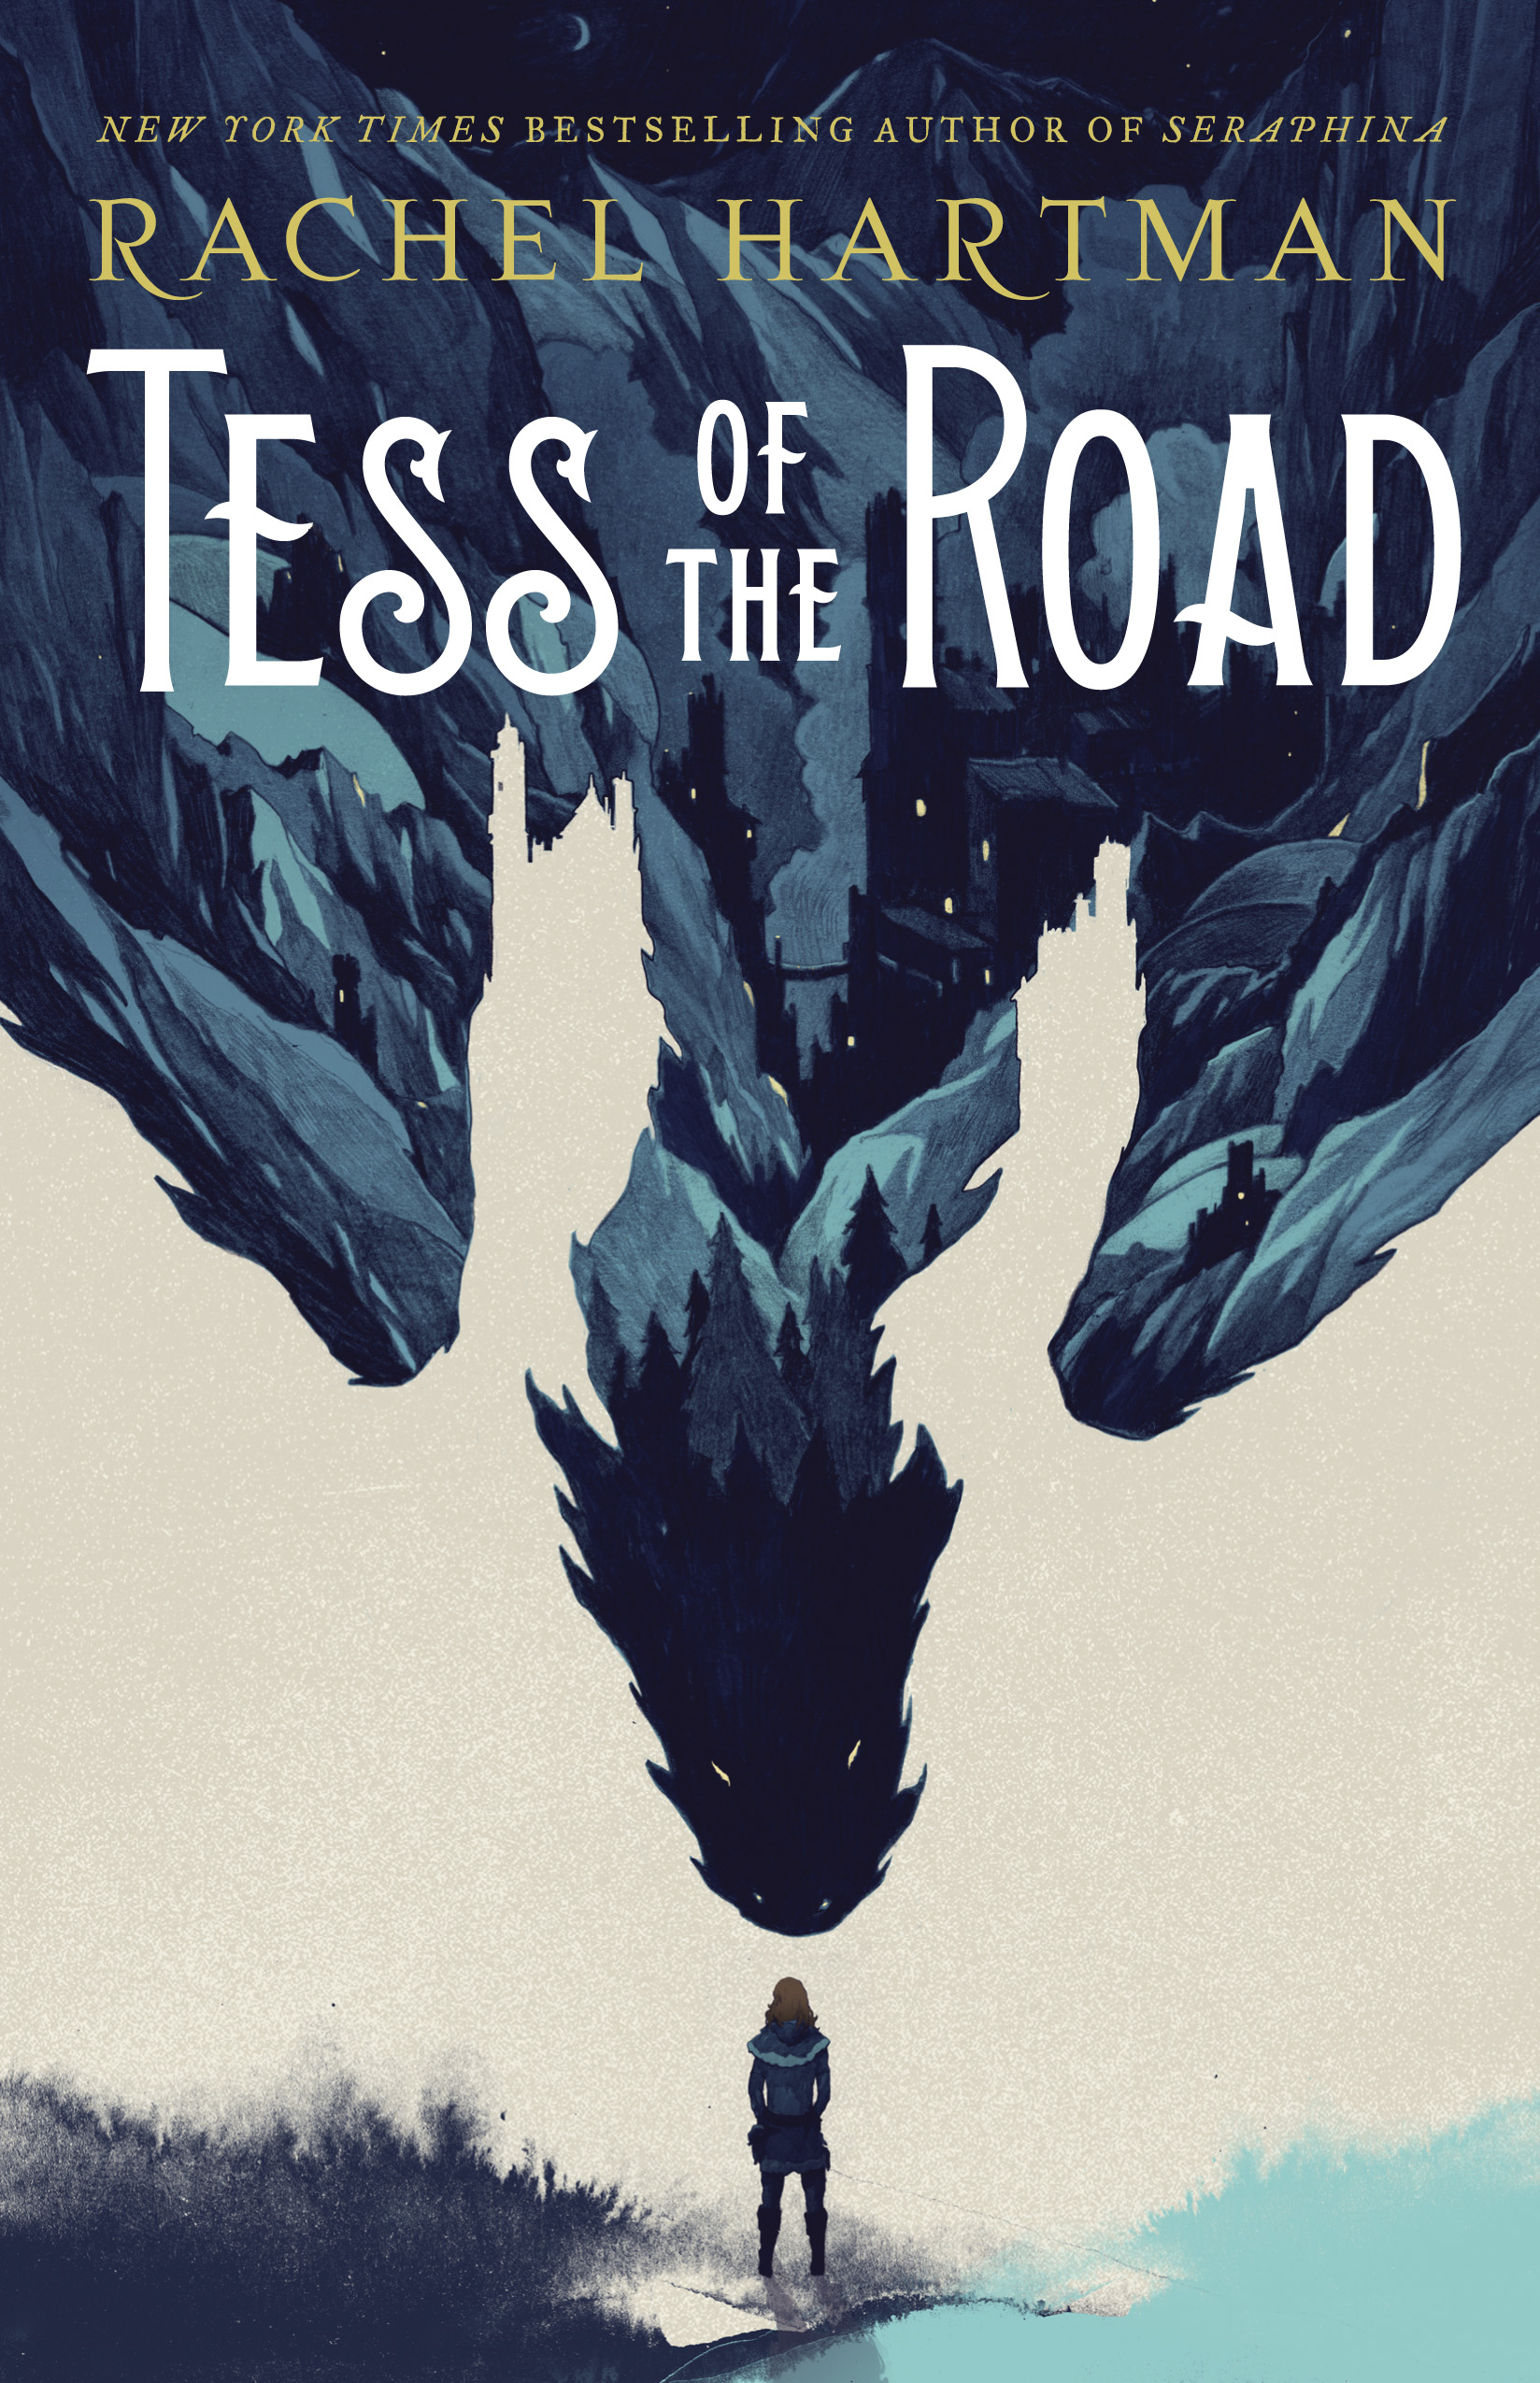 Tess of the Road, by Rachel Hartman